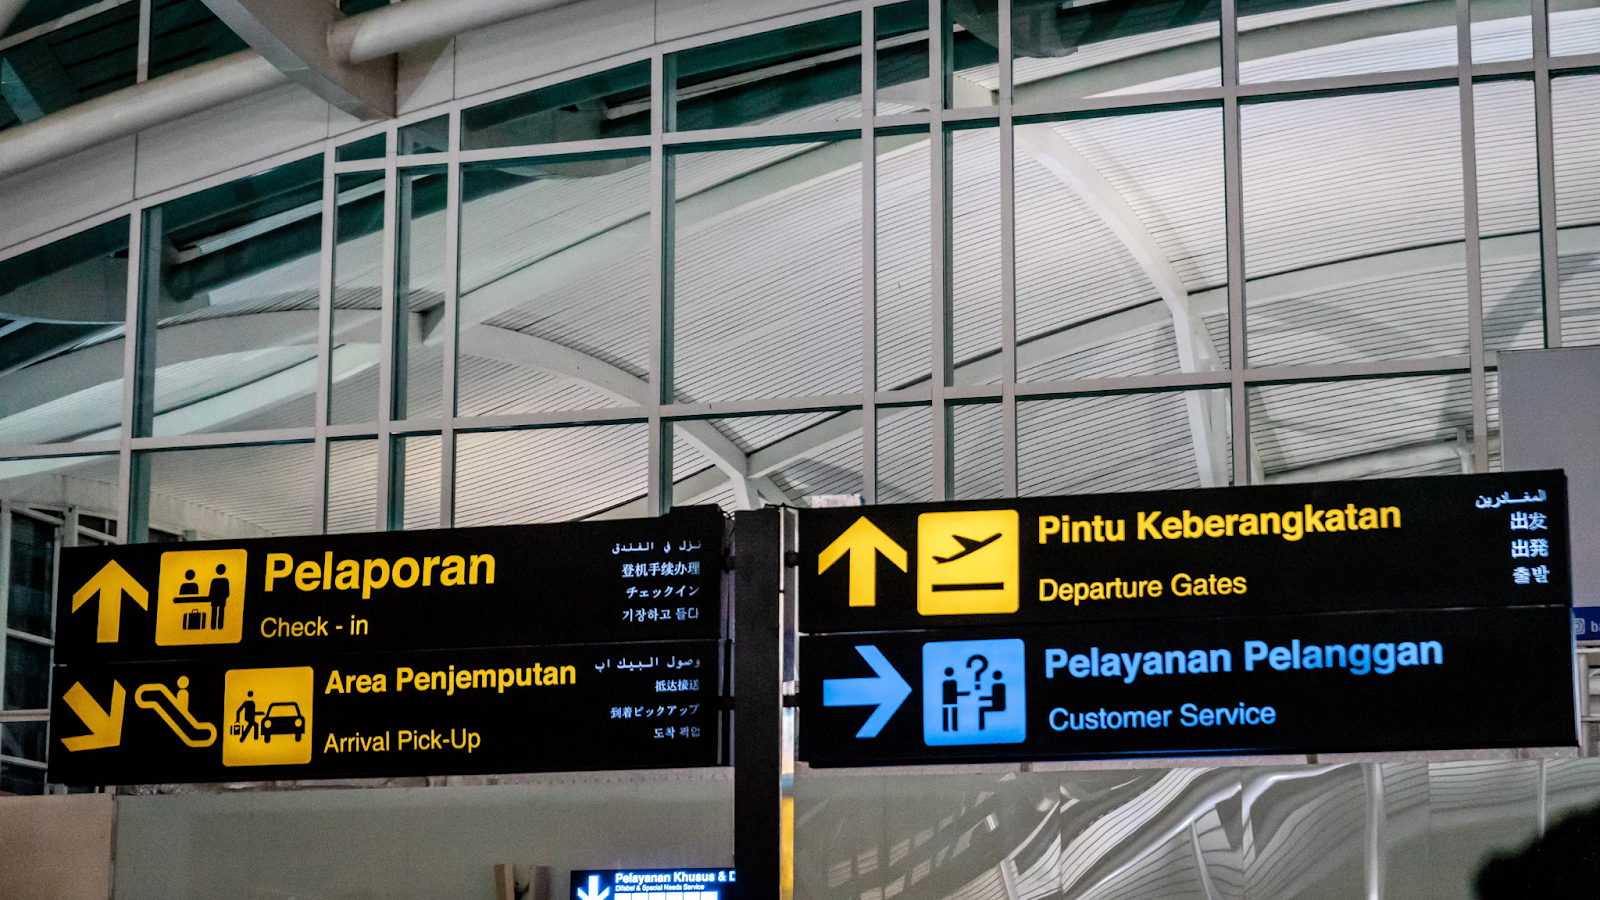 A directional sign at an airport in Bali, Indonesia, displaying instructions in Indonesian and English. The sign indicates areas for Check-in (Pelaporan), Arrival Pick-Up (Area Penjemputan), Departure Gates (Pintu Keberangkatan), and Customer Service (Pelayanan Pelanggan).